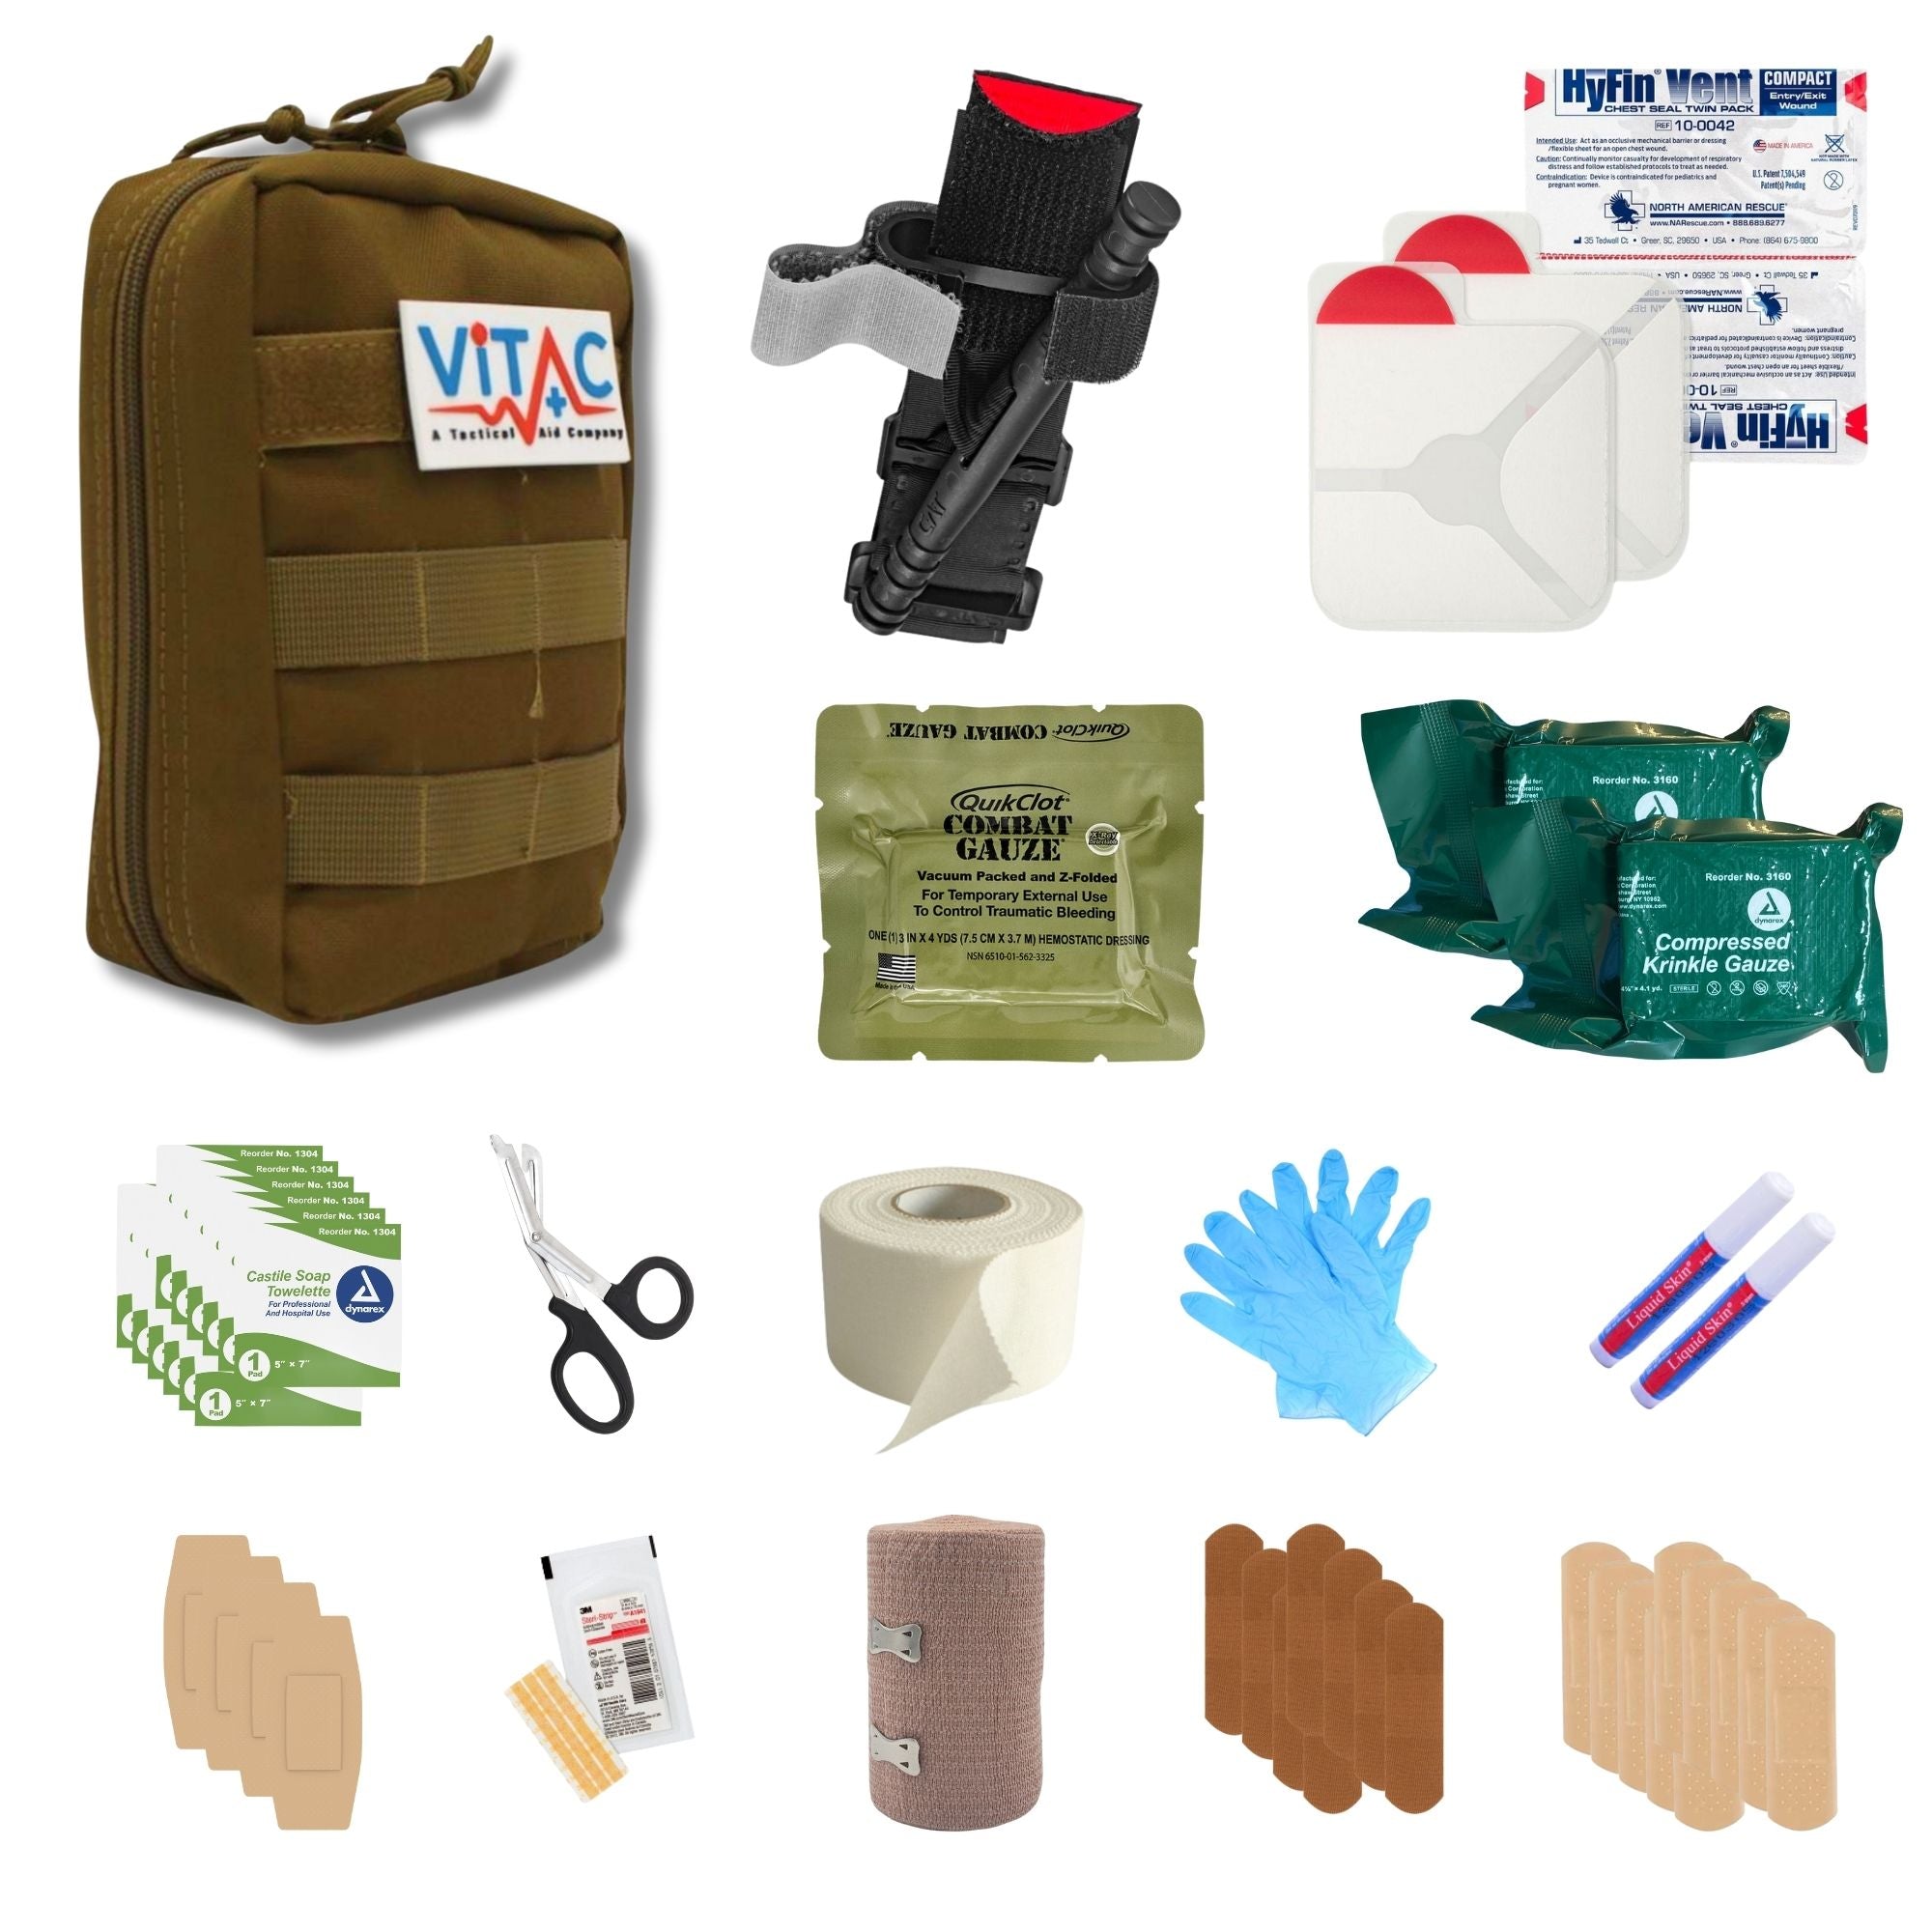 ViTAC Range Essentials First Aid Kit